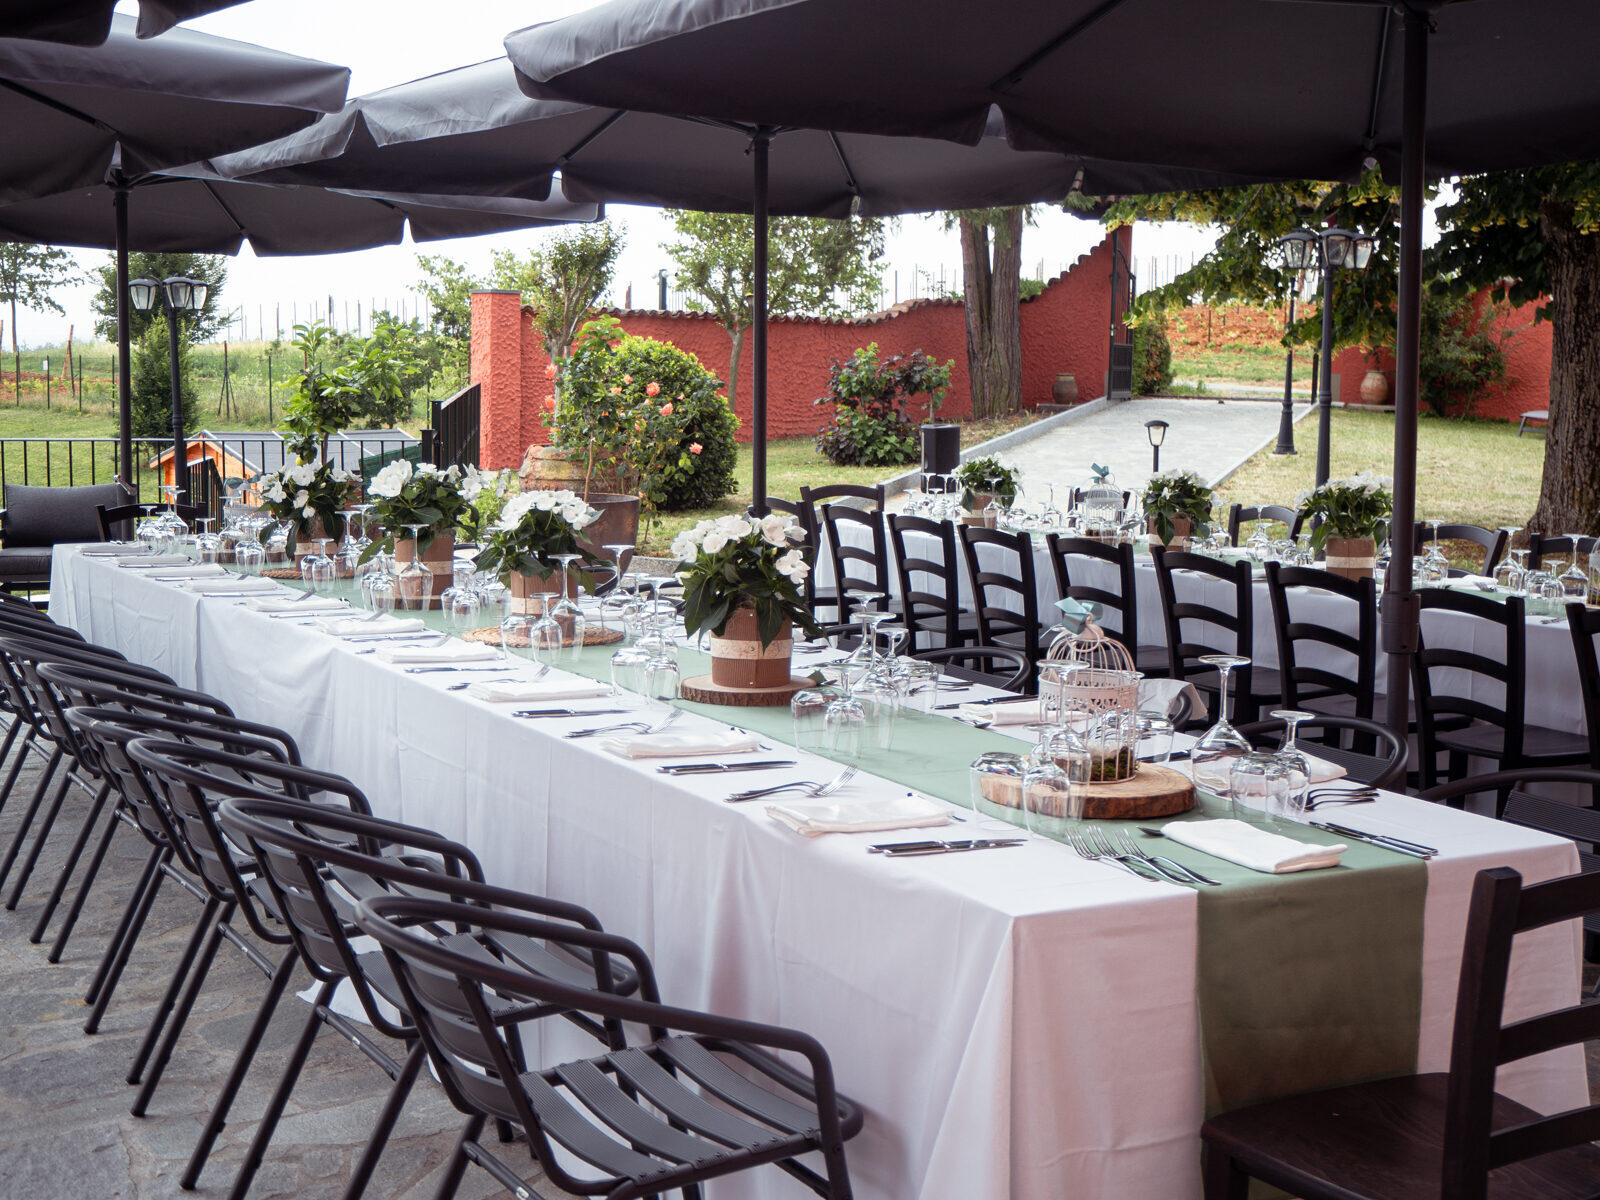 Table set for wedding lunch on terrace CostaRossa photographer Balder Deschildre